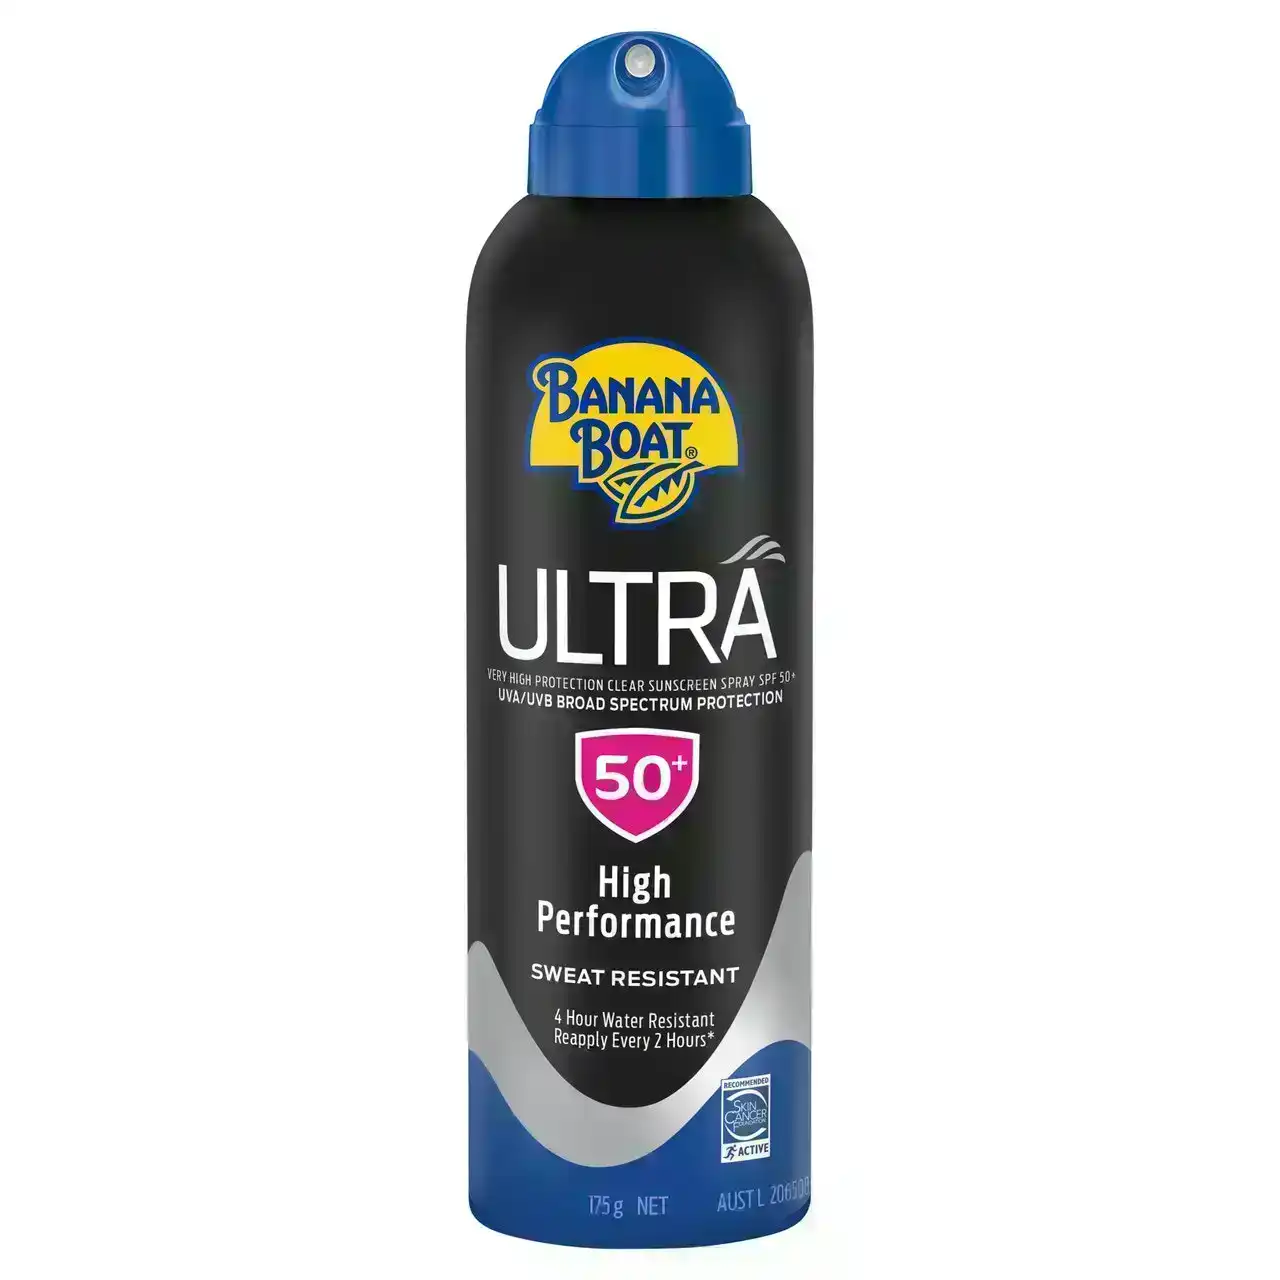 Banana Boat Ultra Sunscreen Spray SPF 50+ 175g